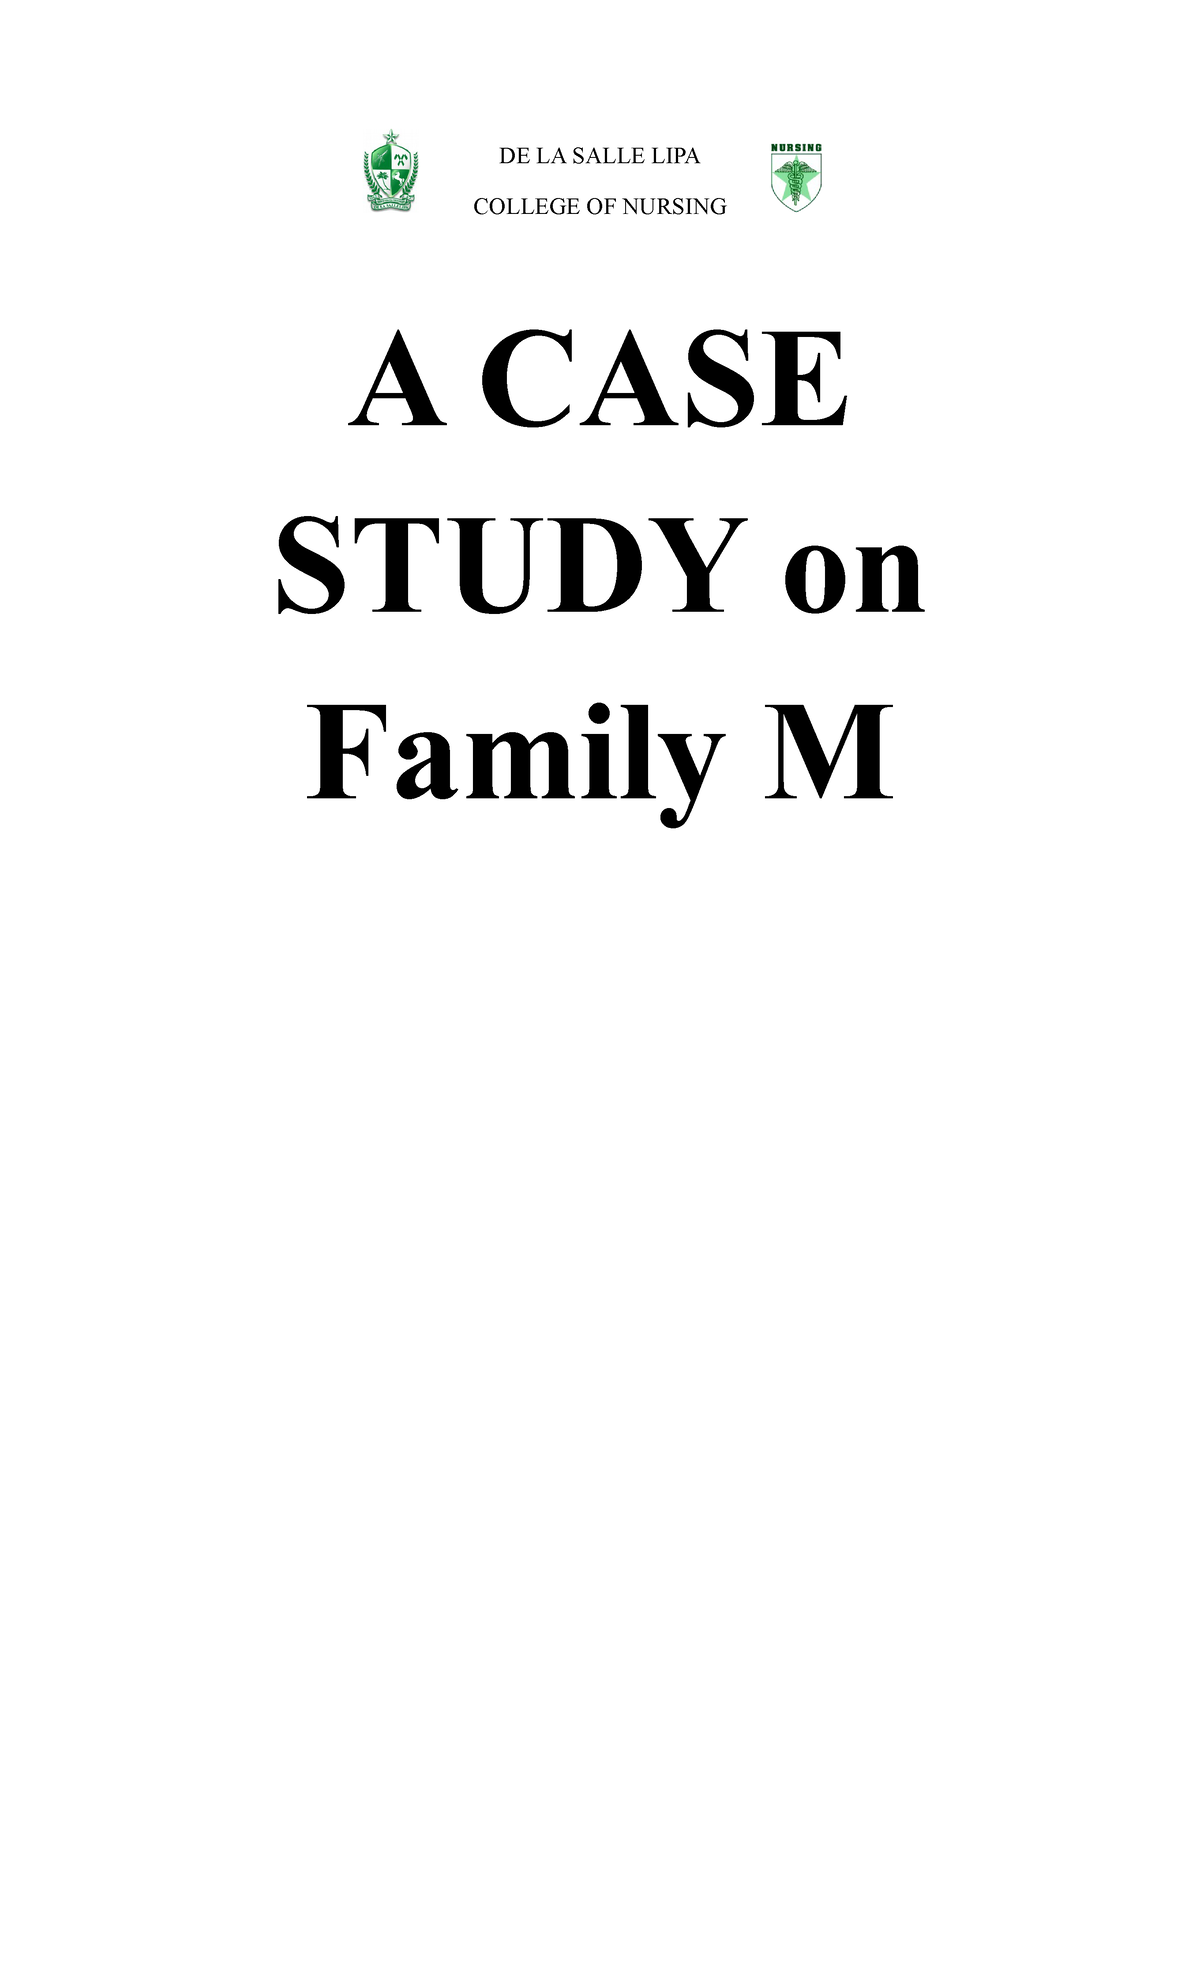 family case study in community health nursing